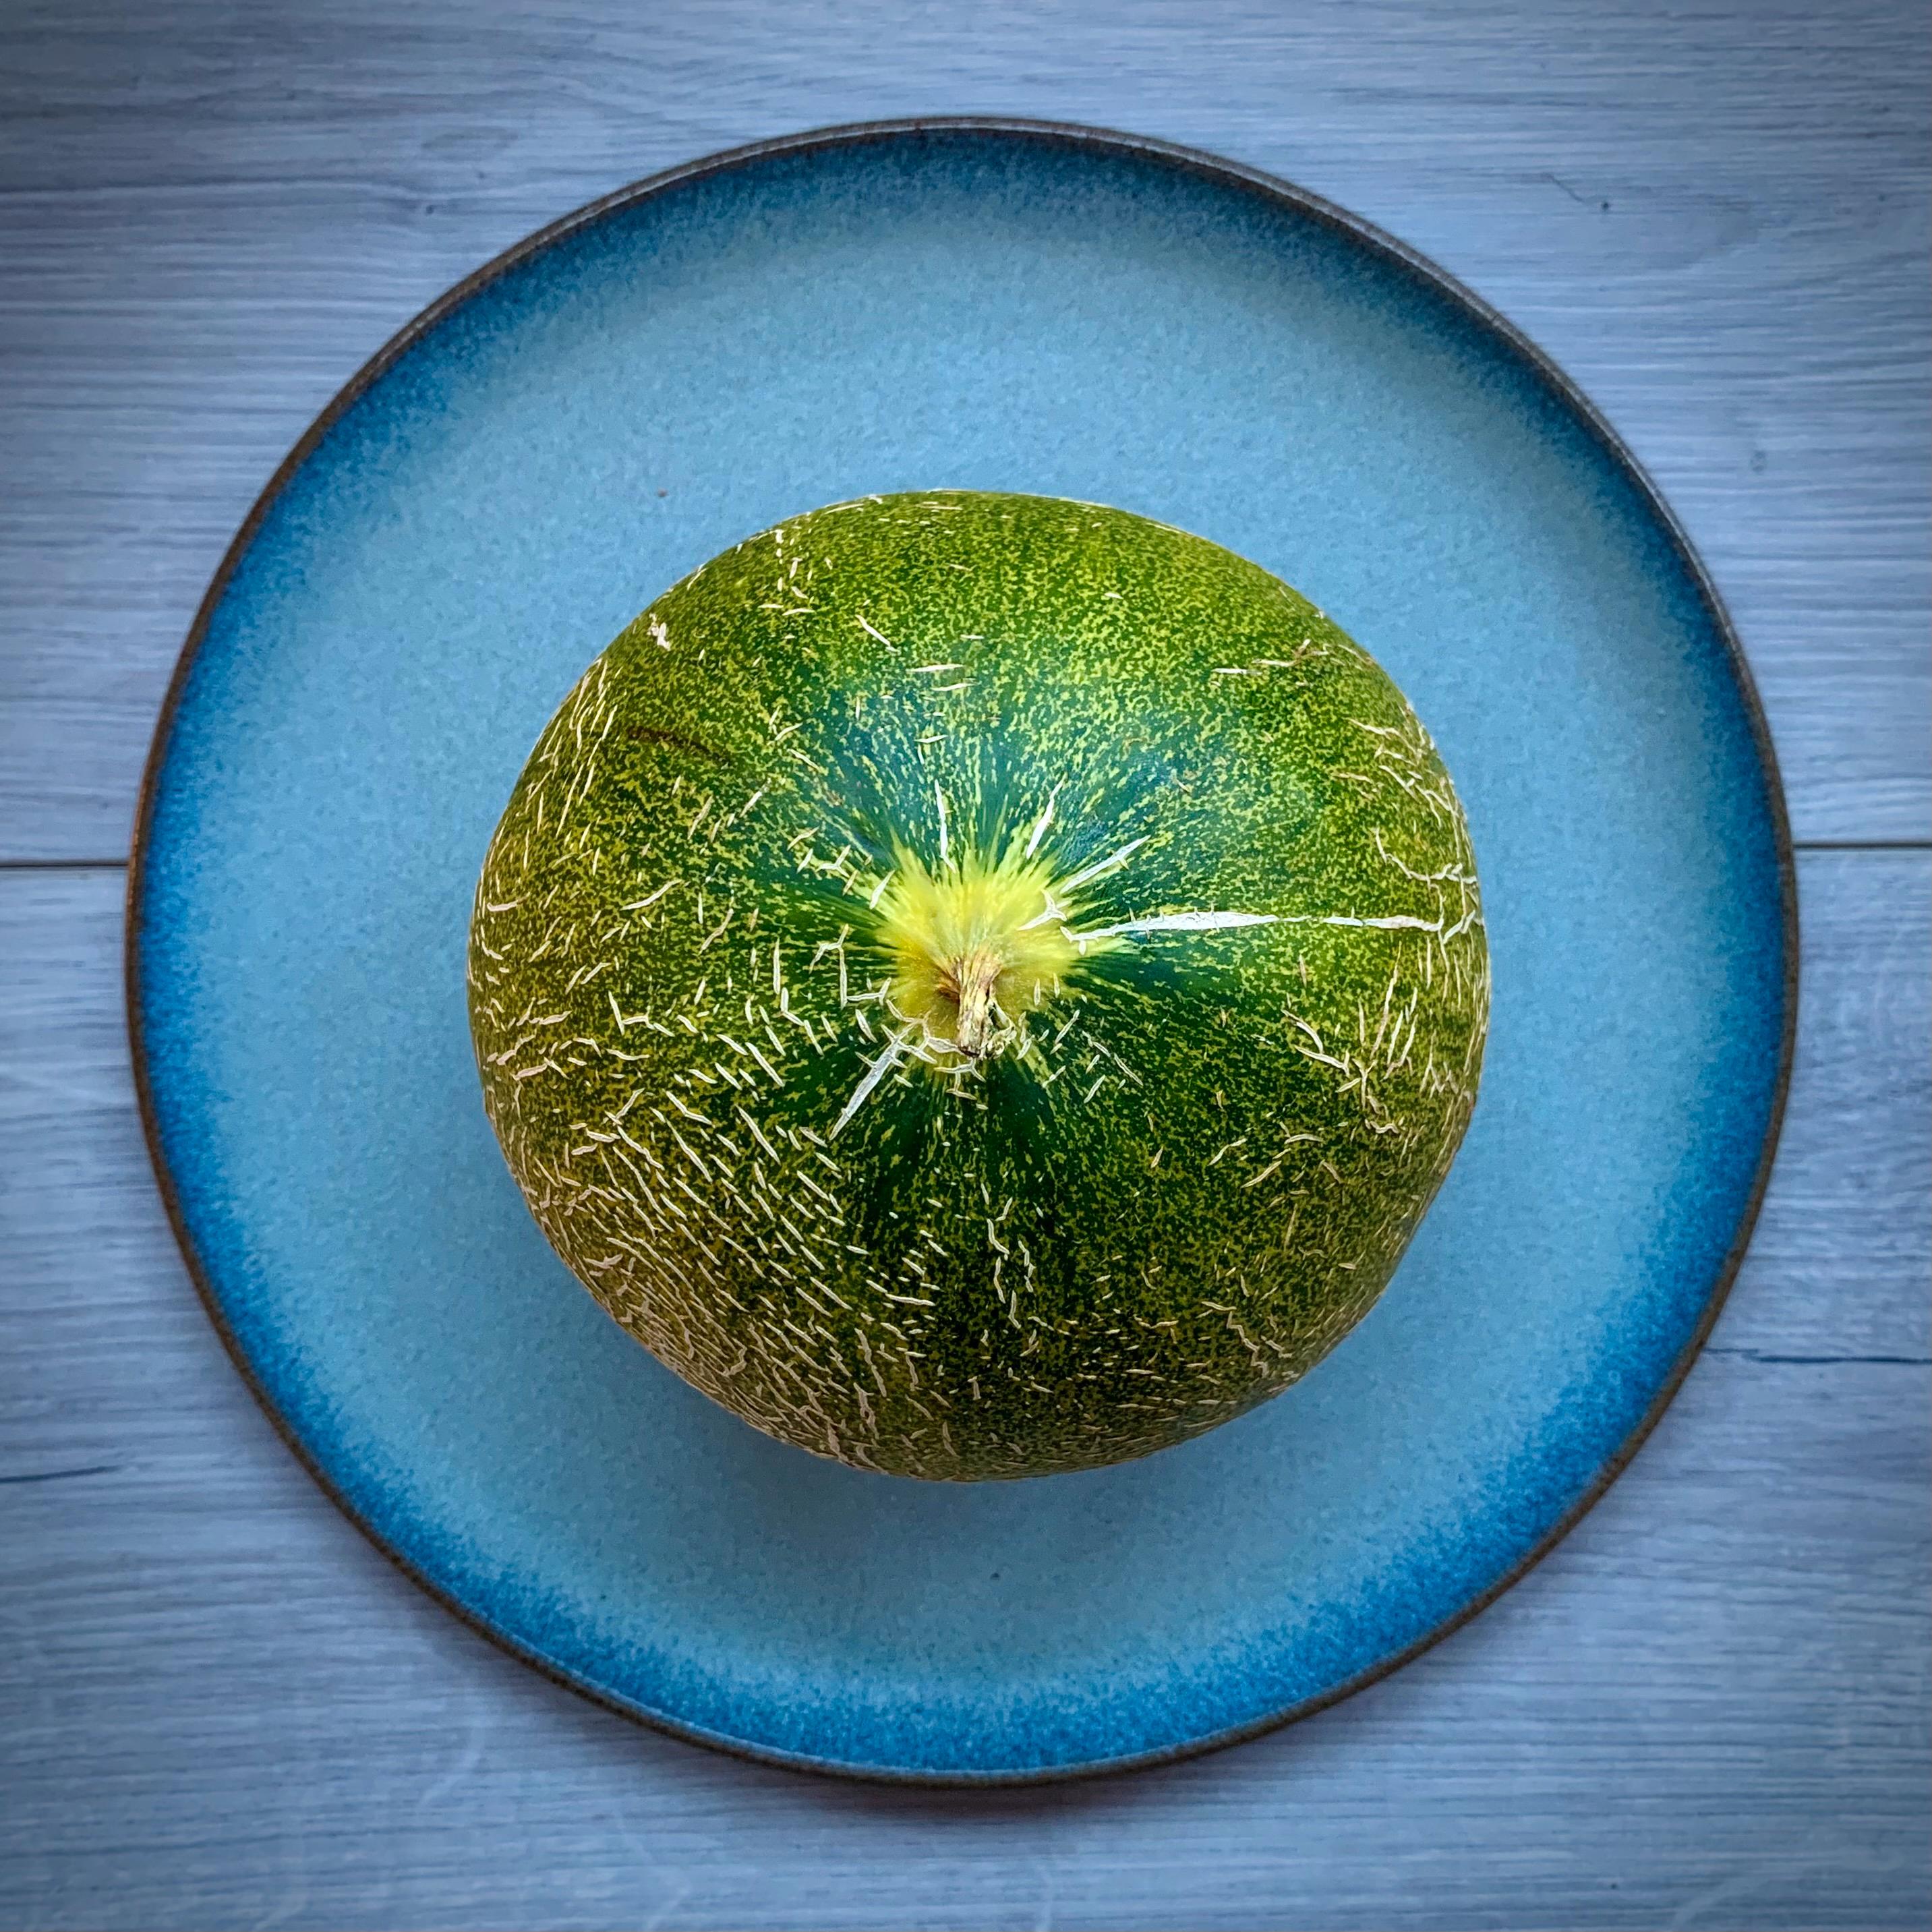 NYKOMMER: Denne melonen er ny i Norge.